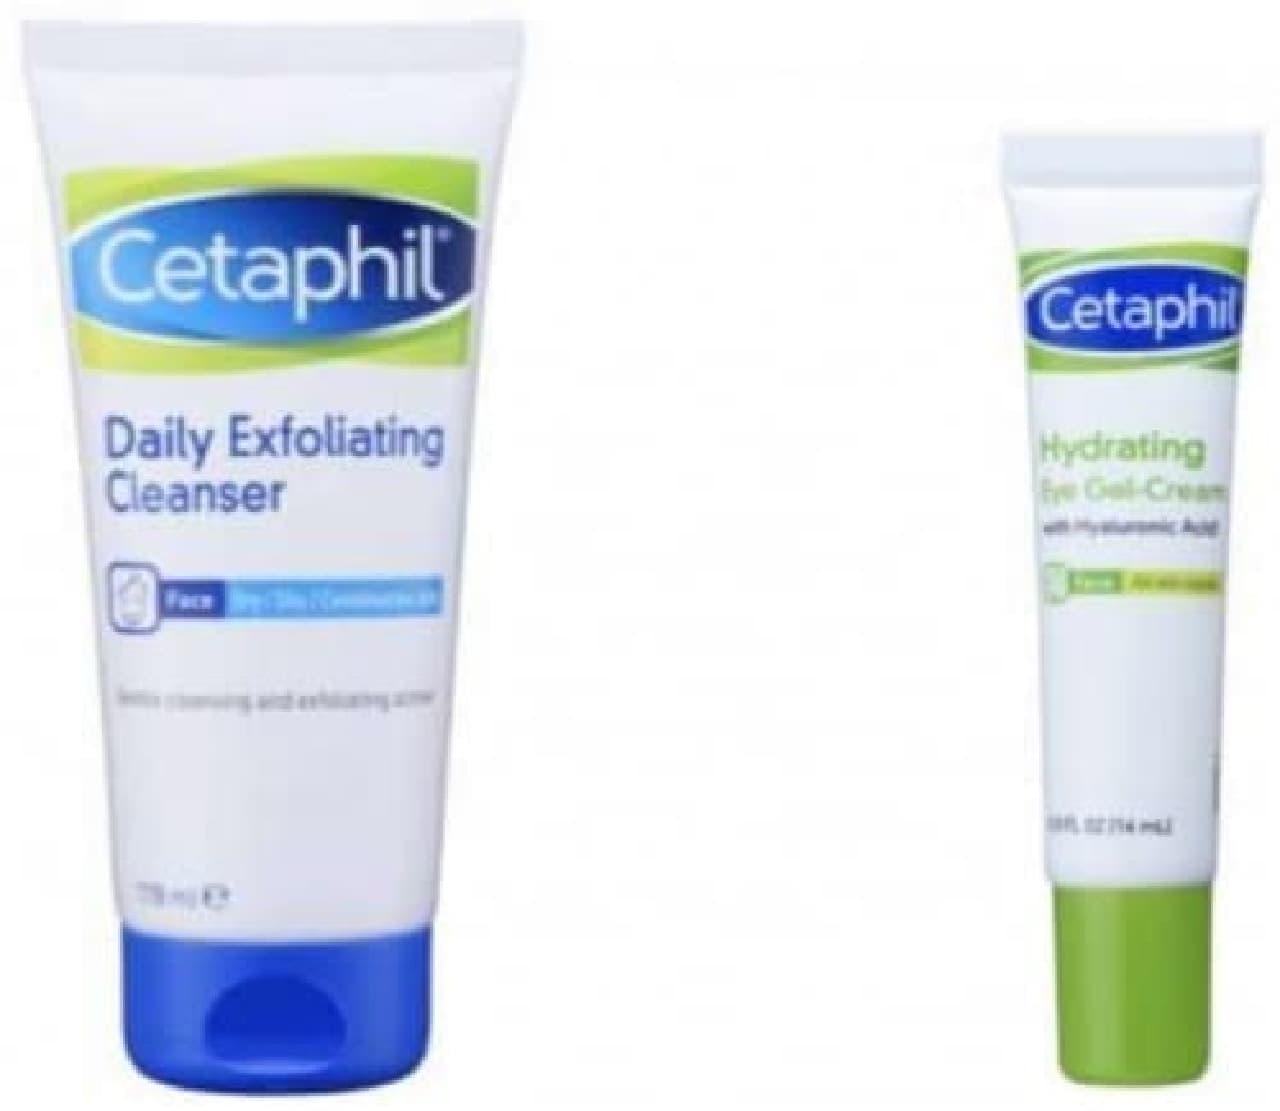 "Cetaphil Gentle Exfoliating Cleanser" and "Cetaphil Hydrating Eye Gel Cream HA"